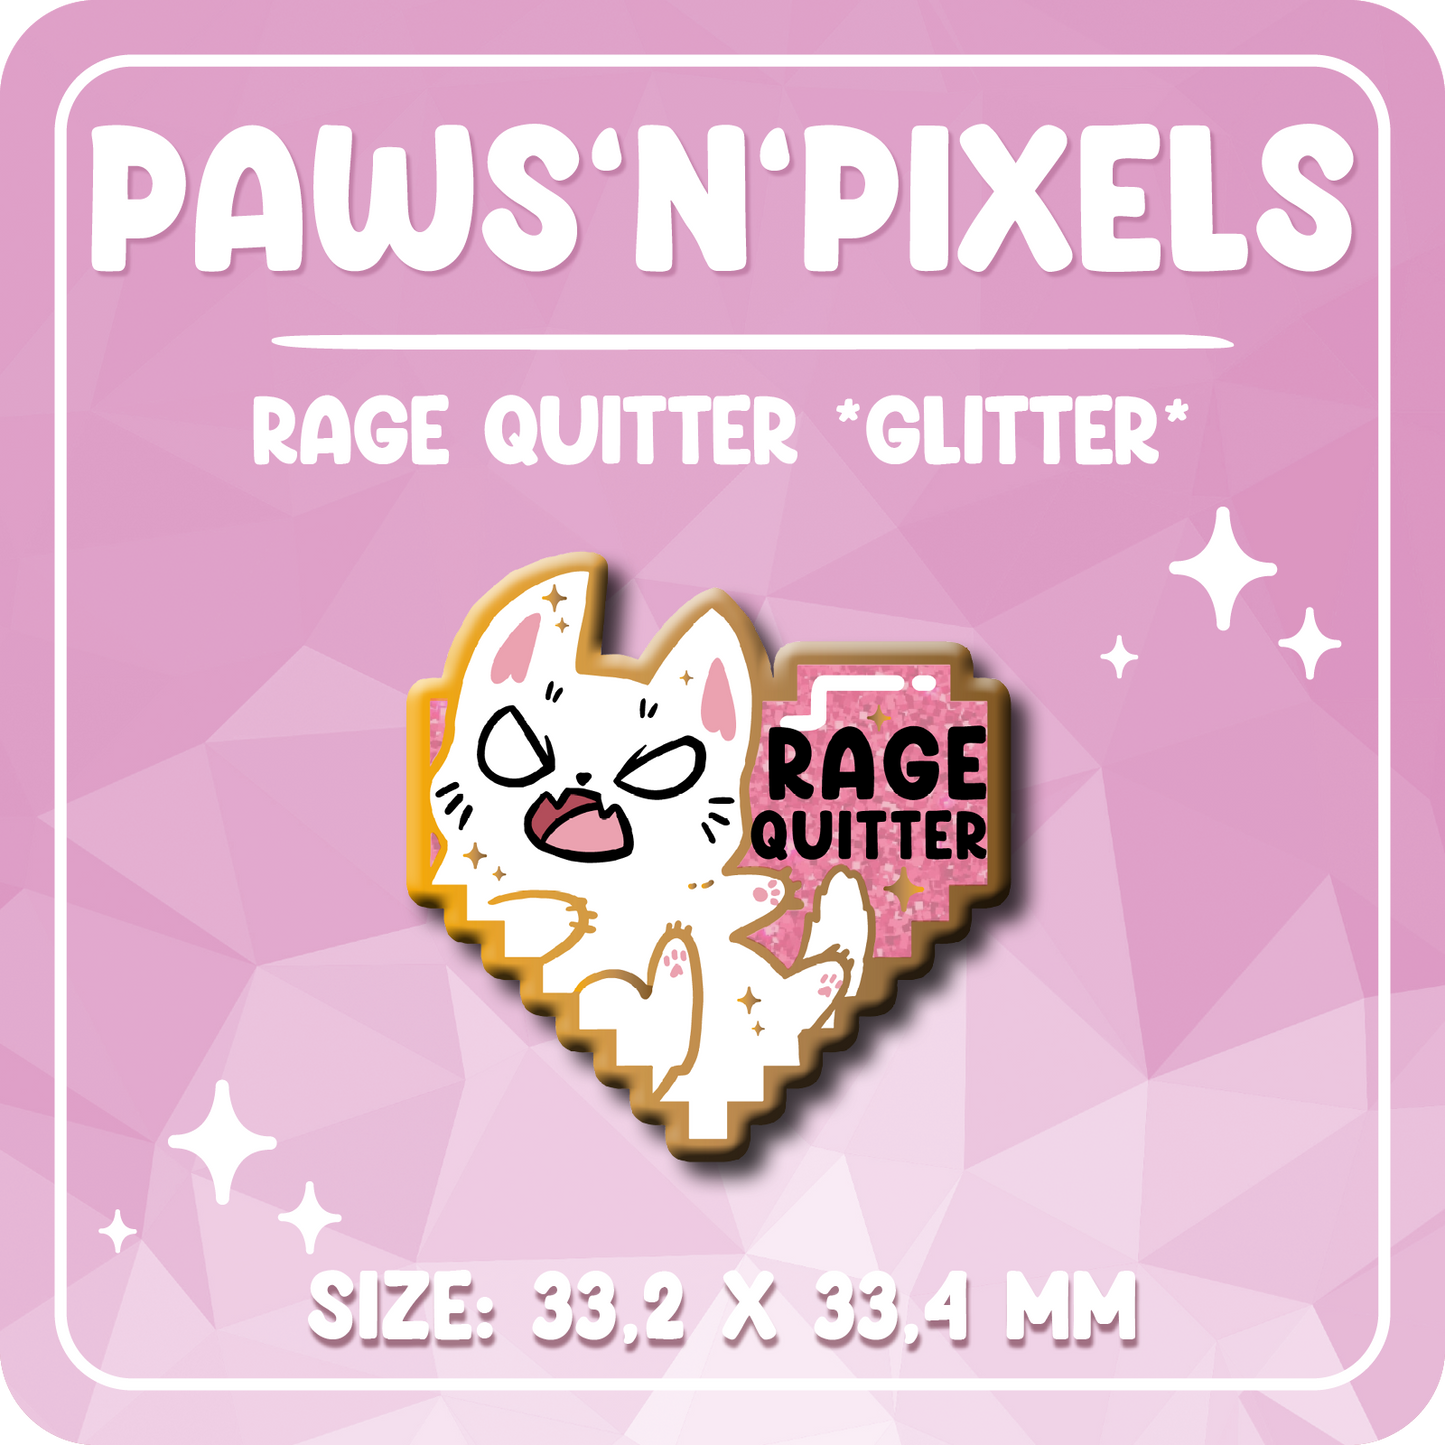 Paws'n'Pixels Rage Quitter GLITTER enamel pin